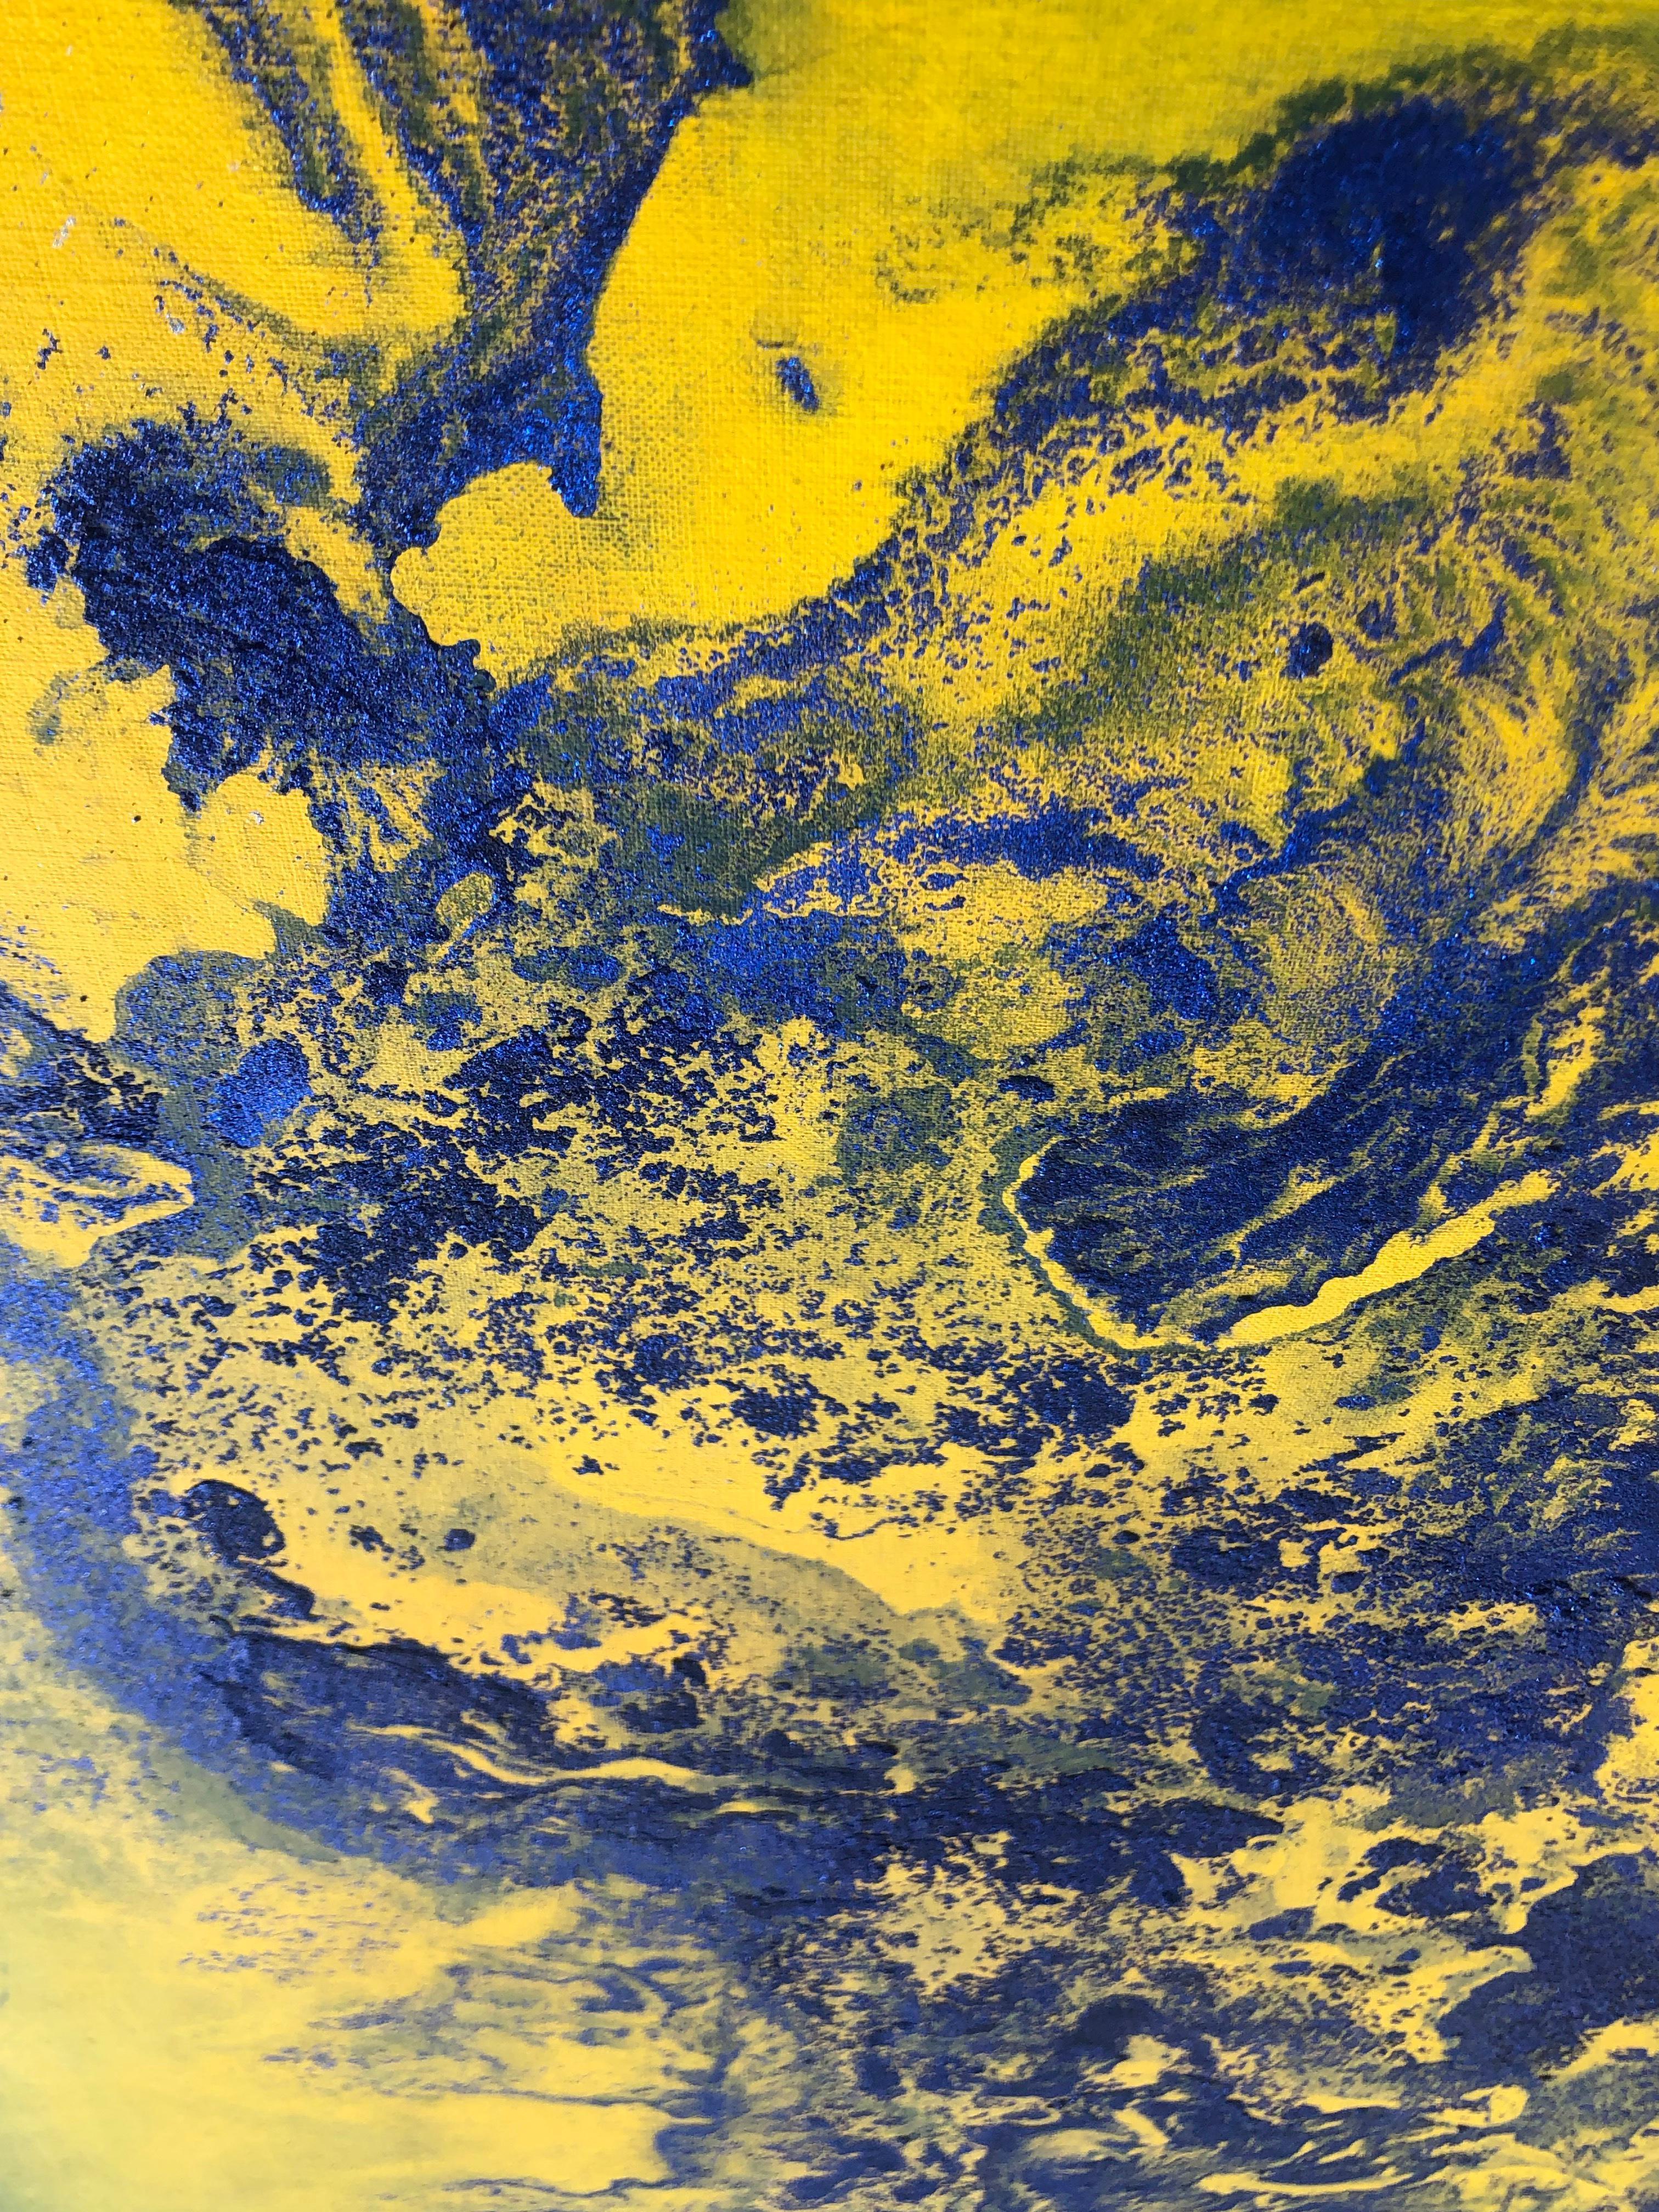 Contemporary art - 21st century painting on linen canvas - Blue, yellow, waves
Artist: Volodymyr Zayichenko
Year of creation: 2019
Size: H 59.45 in. x W 20.08 in. x D 1.19 in.
         H 151 cm x W 51 cm x D 3 cm